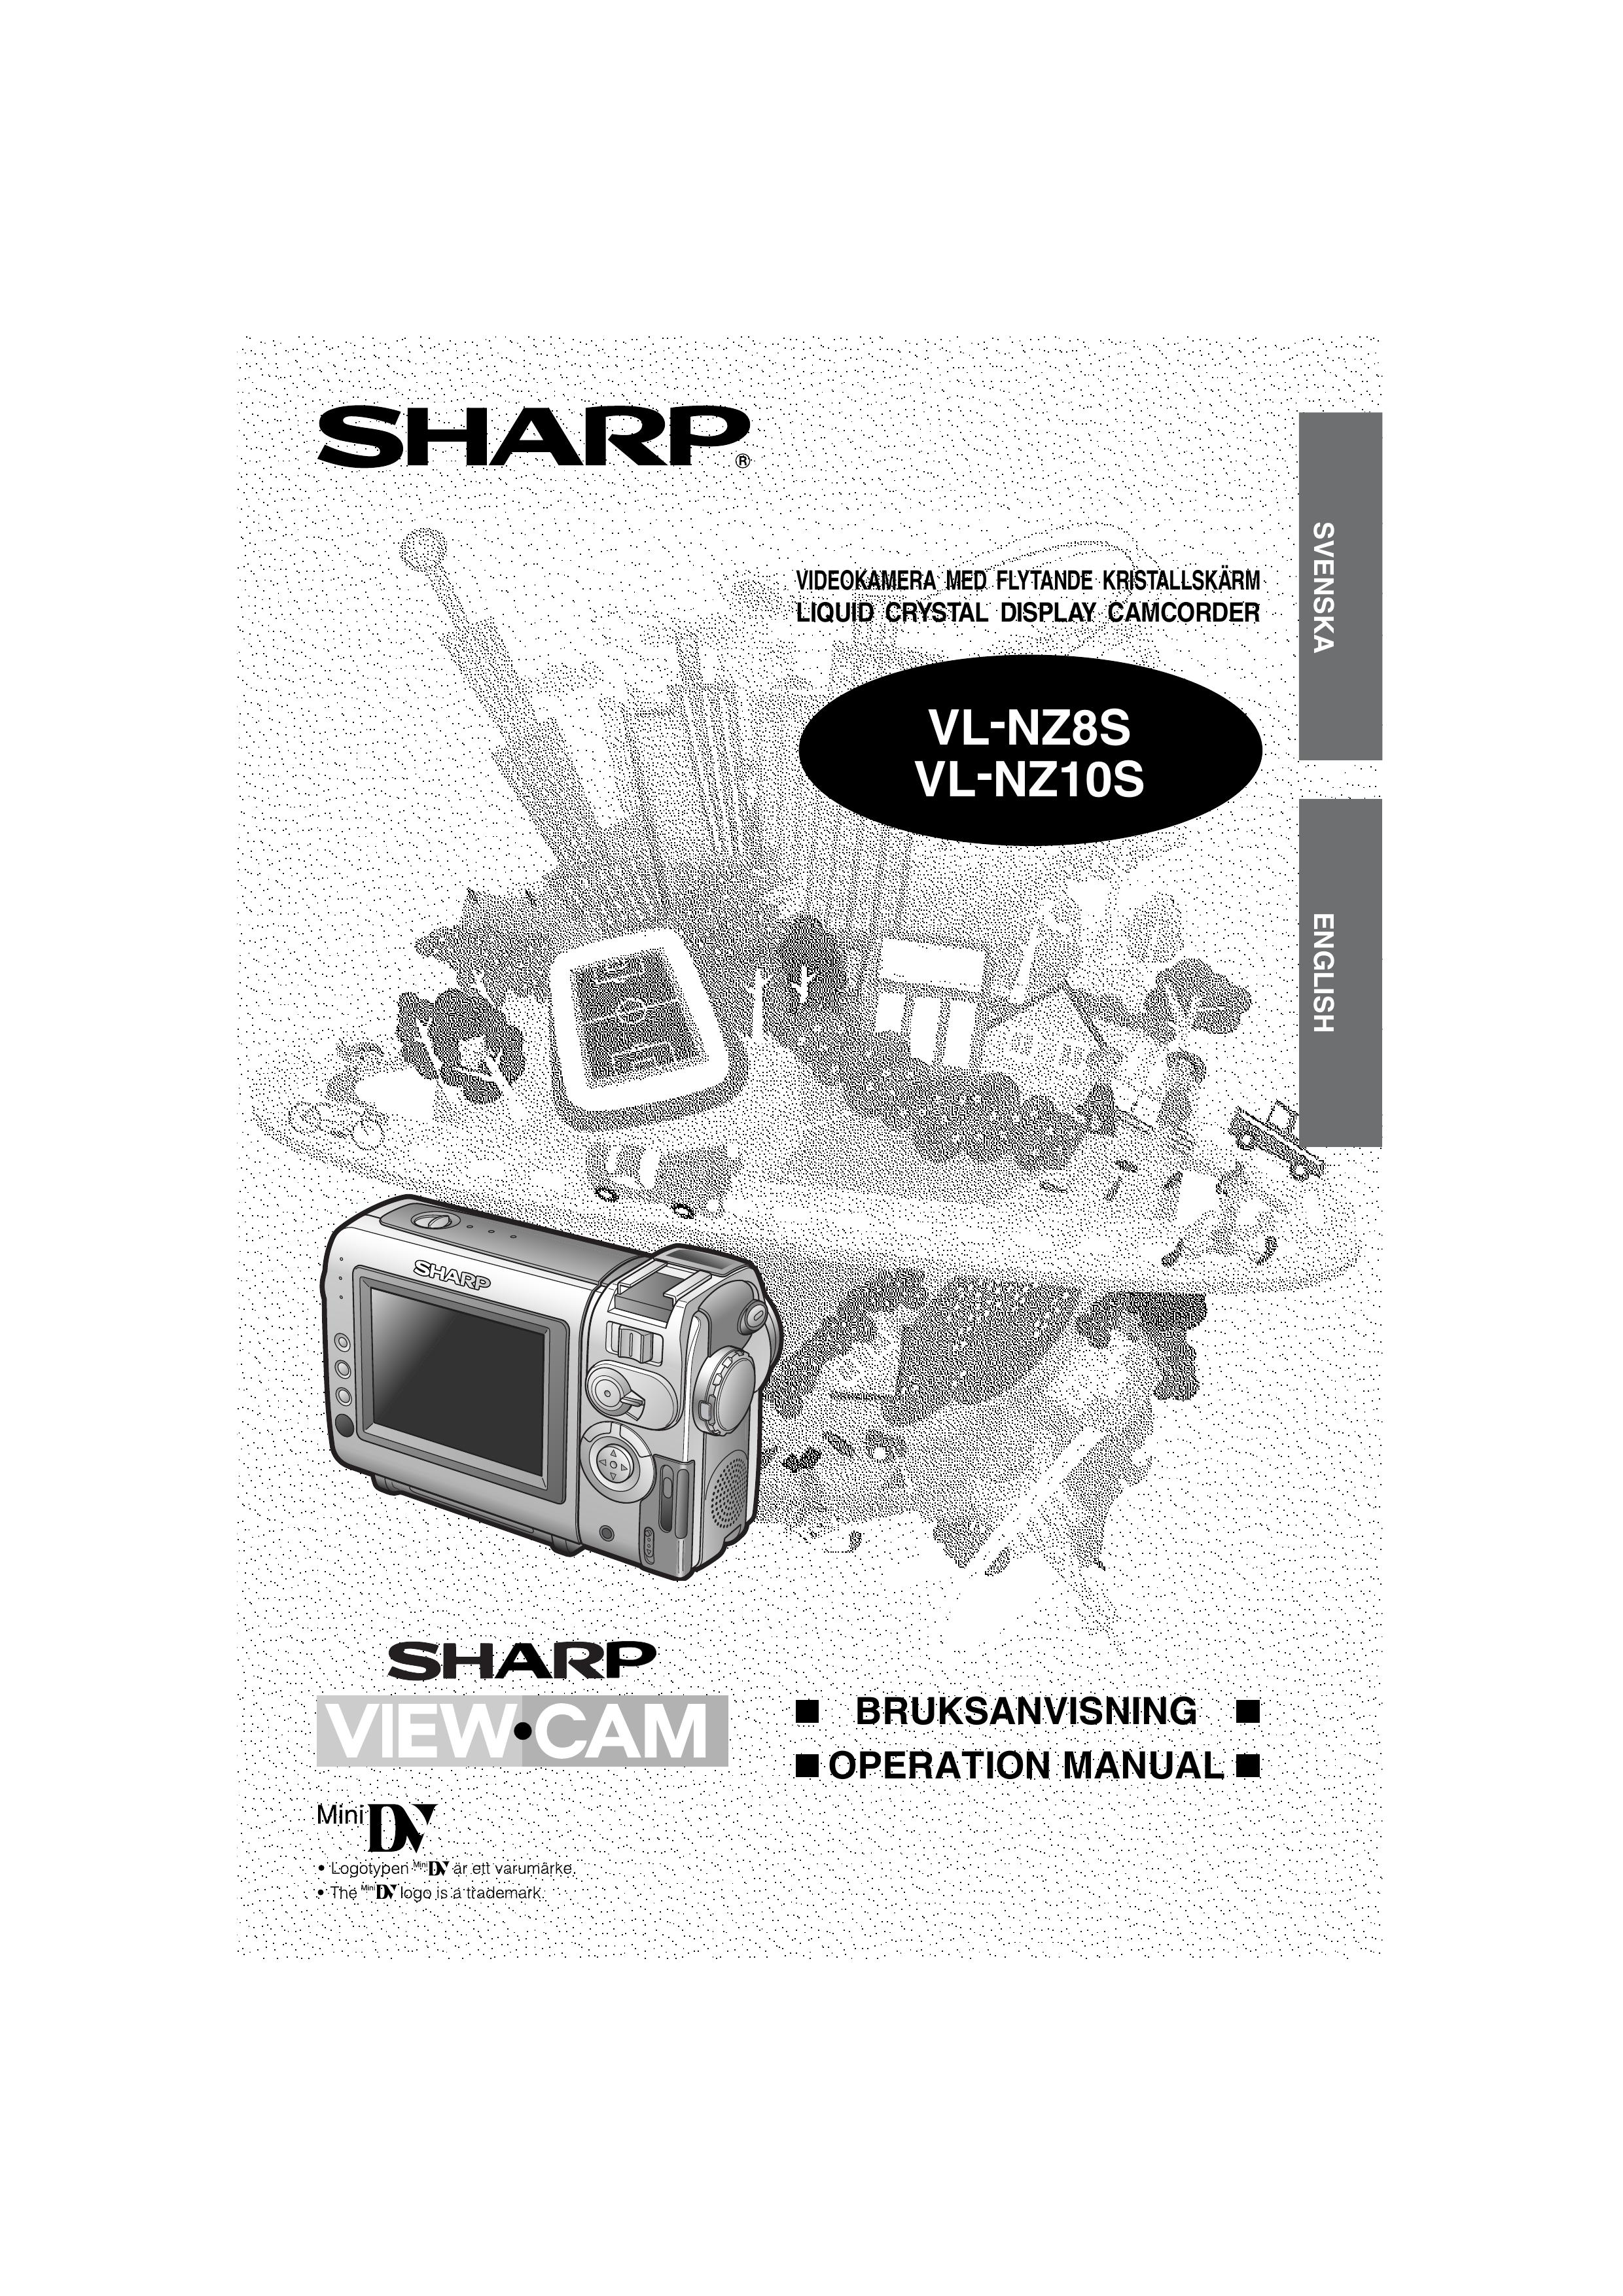 Sharp VL-NZ10S Camcorder User Manual